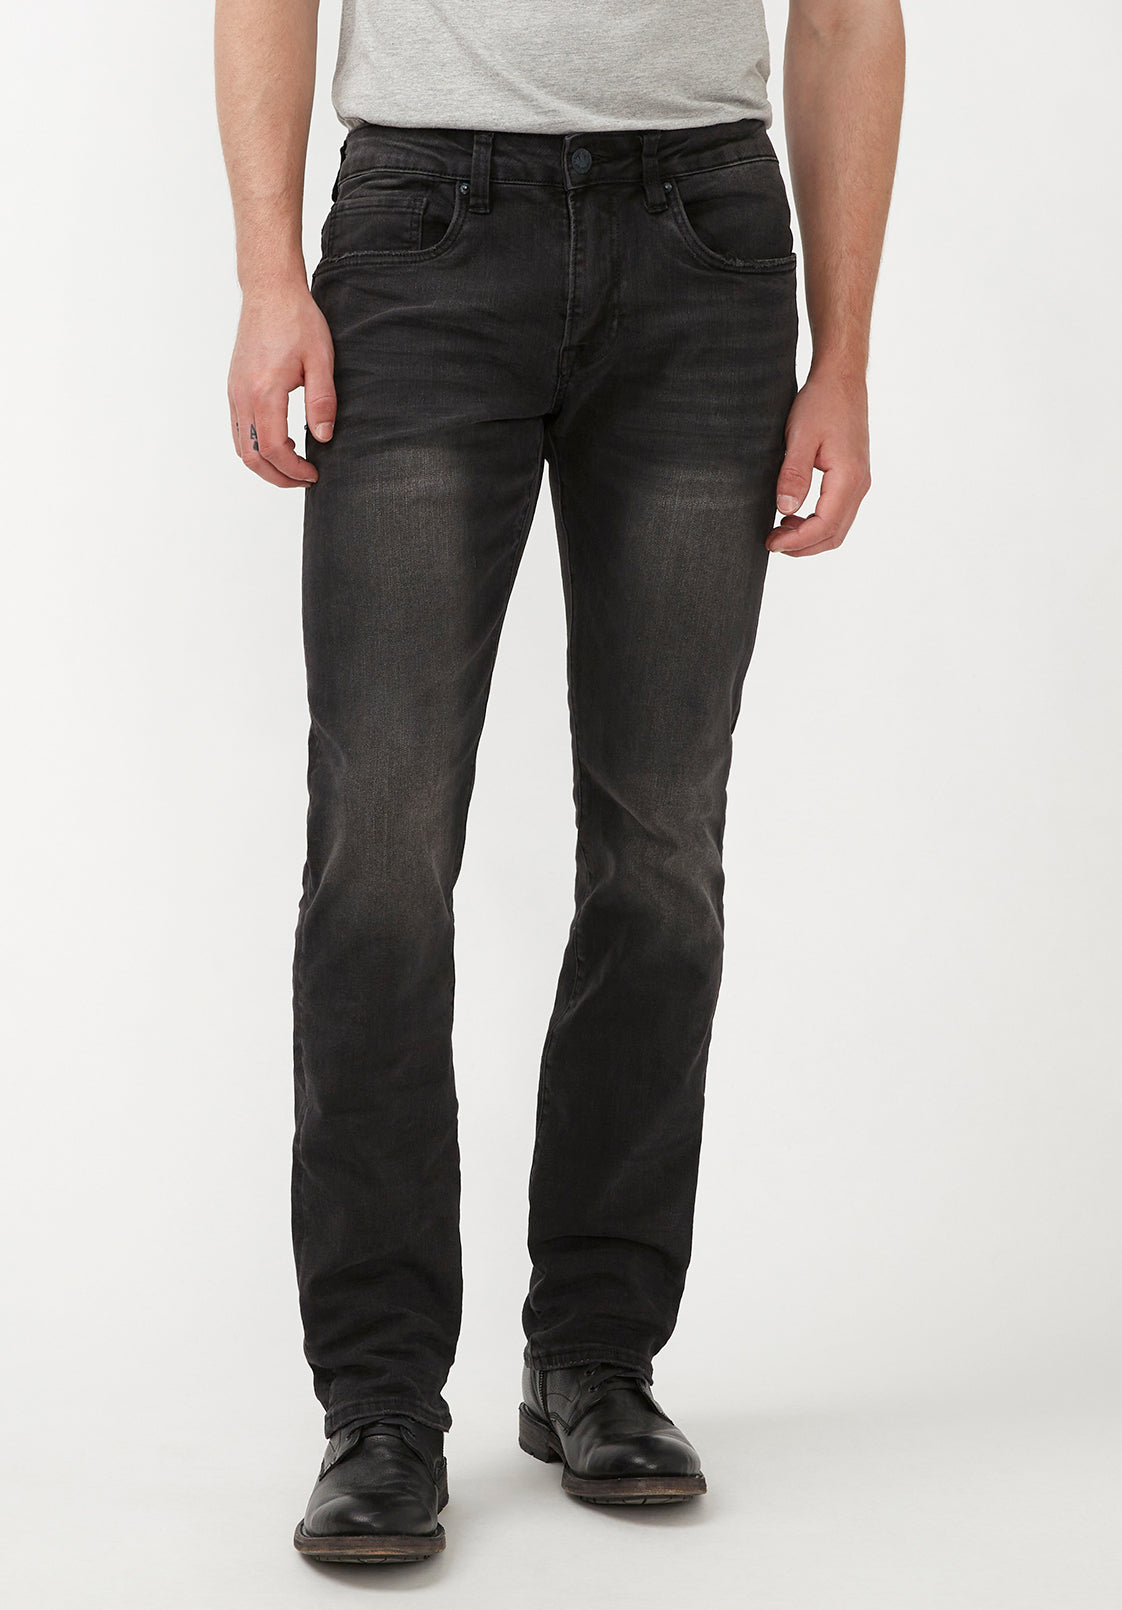 Straight Six Men's Jeans in Crinkled and Sanded Black - BM22614 ...